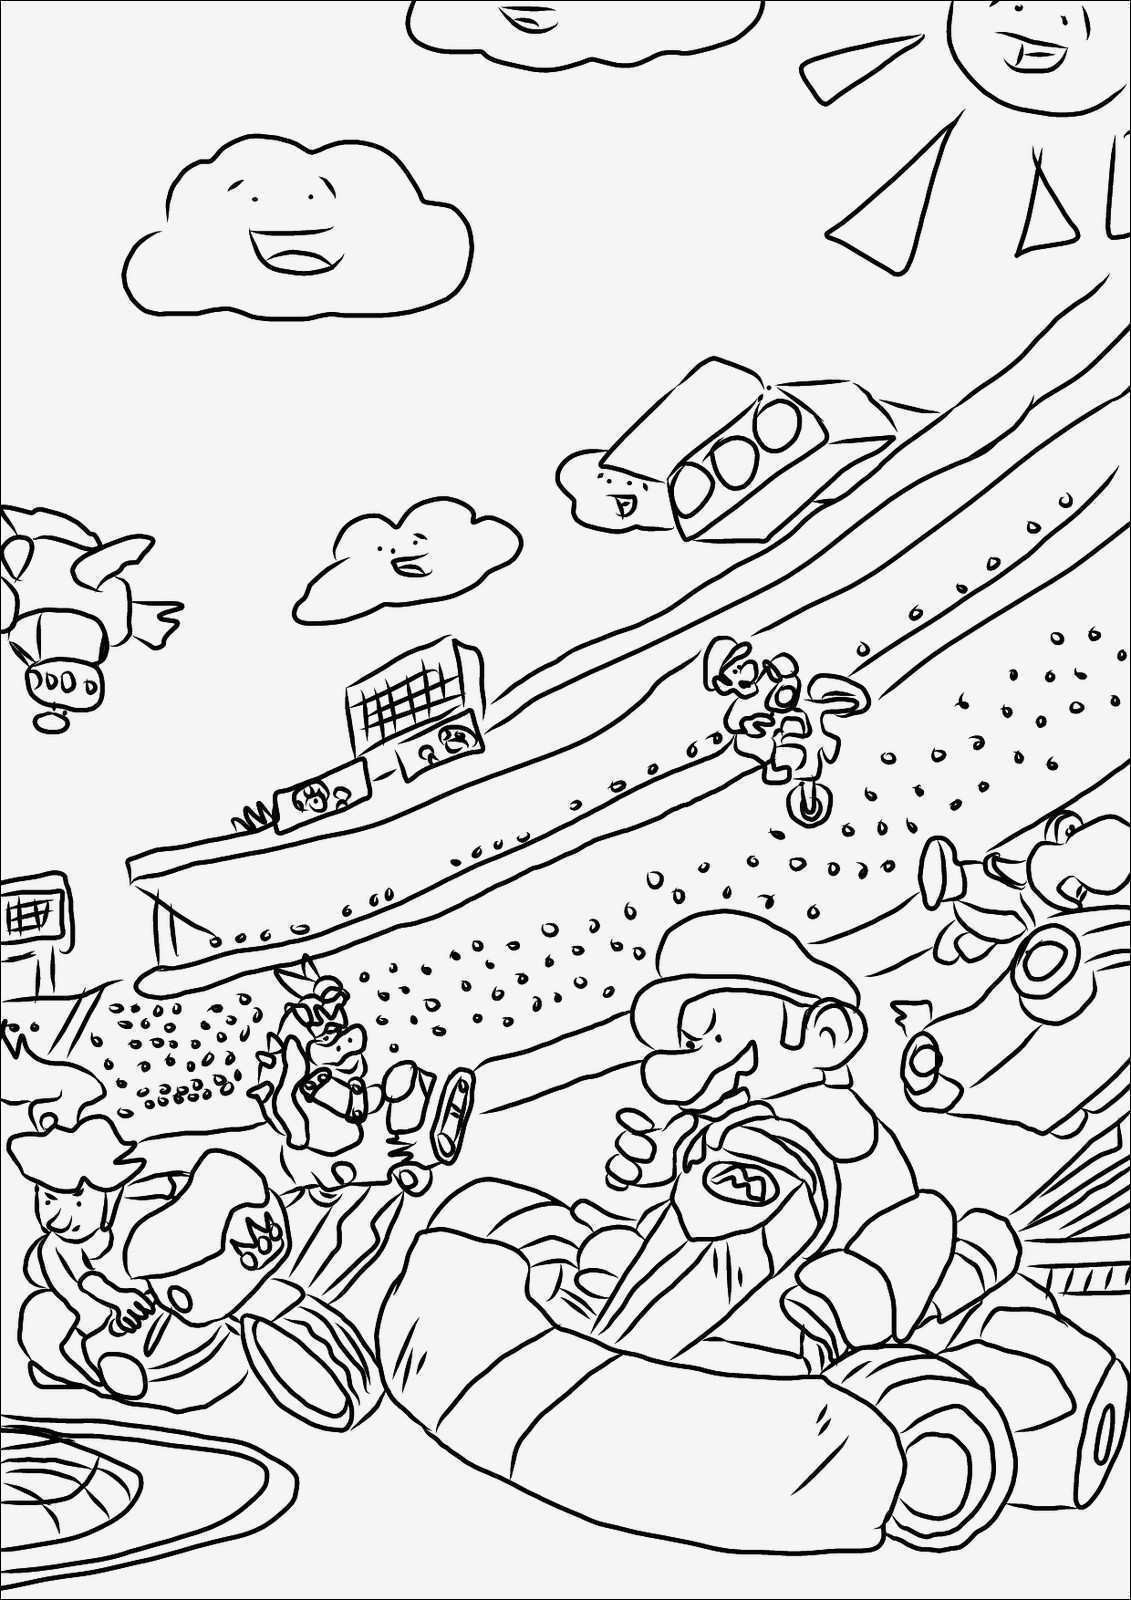 Ausmalbilder Mario Odyssey
 Mario Odyssey Ausmalbilder Image – Ausmalbilder Ideen